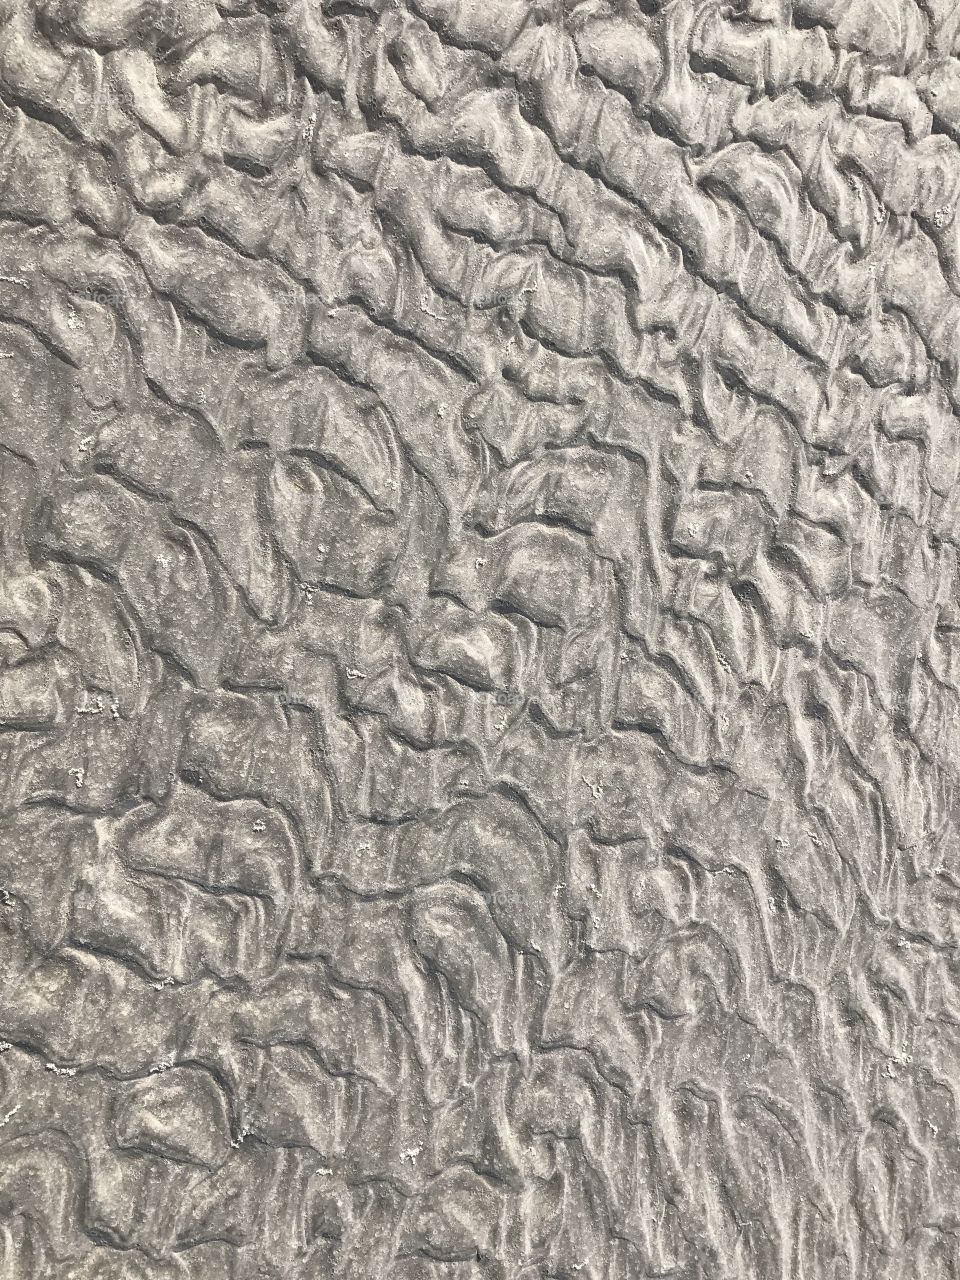 Close-up of rippled pattern on sand beach